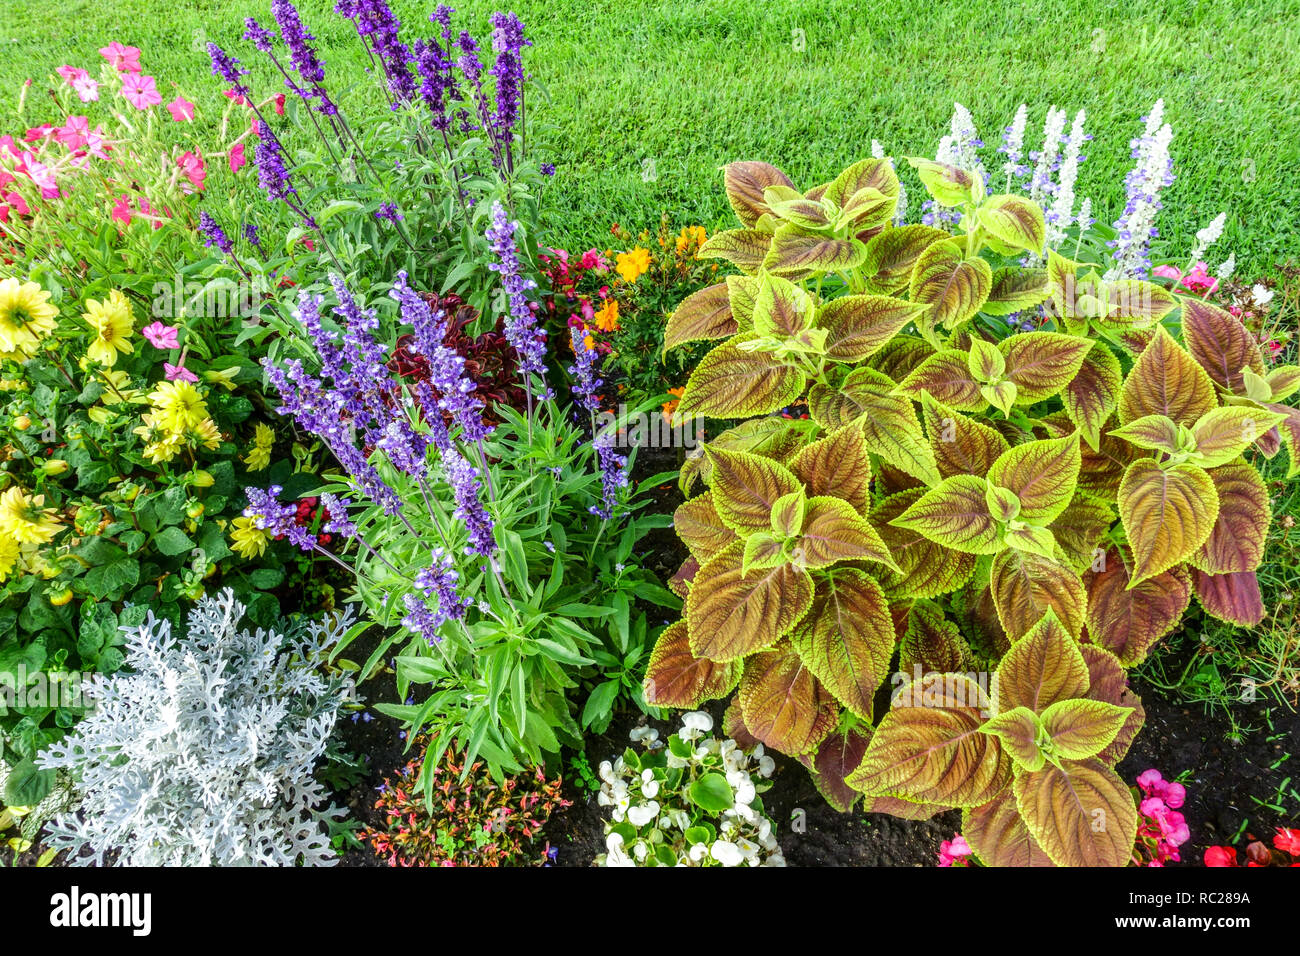 Annual Flower Bed Garden Coleus Begonia Stock Photo Alamy